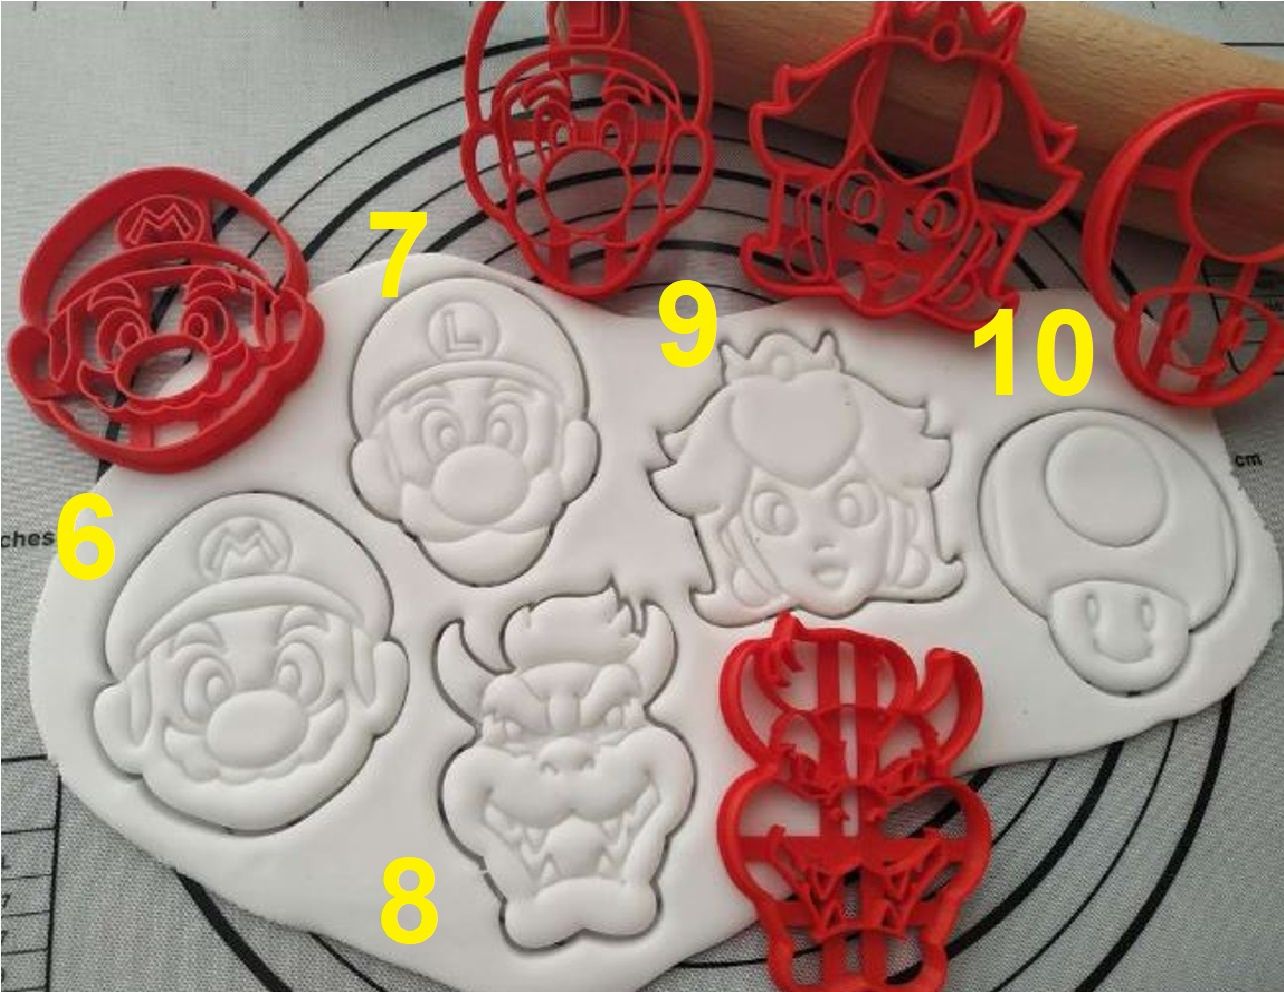 Forme prajituri sau biscuiti cu Personaje din desene - diverse modele